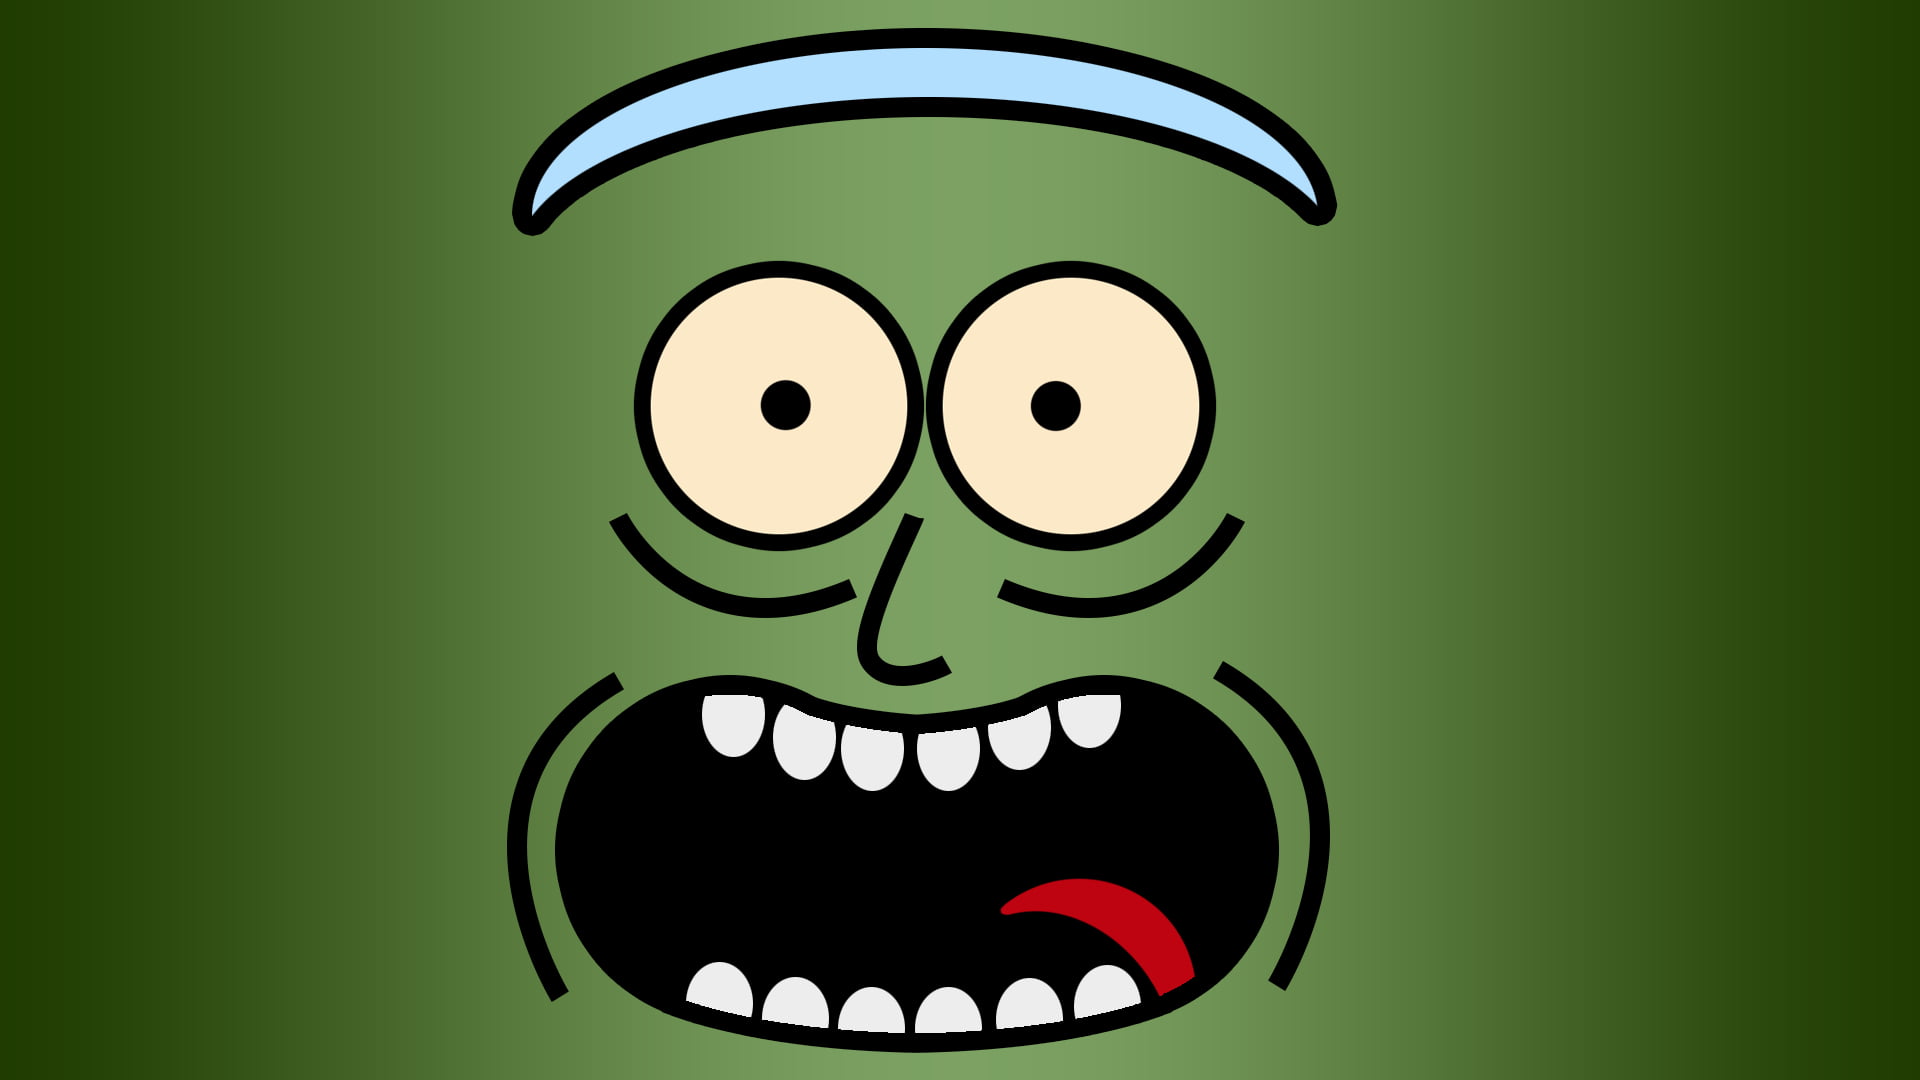 green cartoon character wallpaper, Rick and Morty, vector graphics